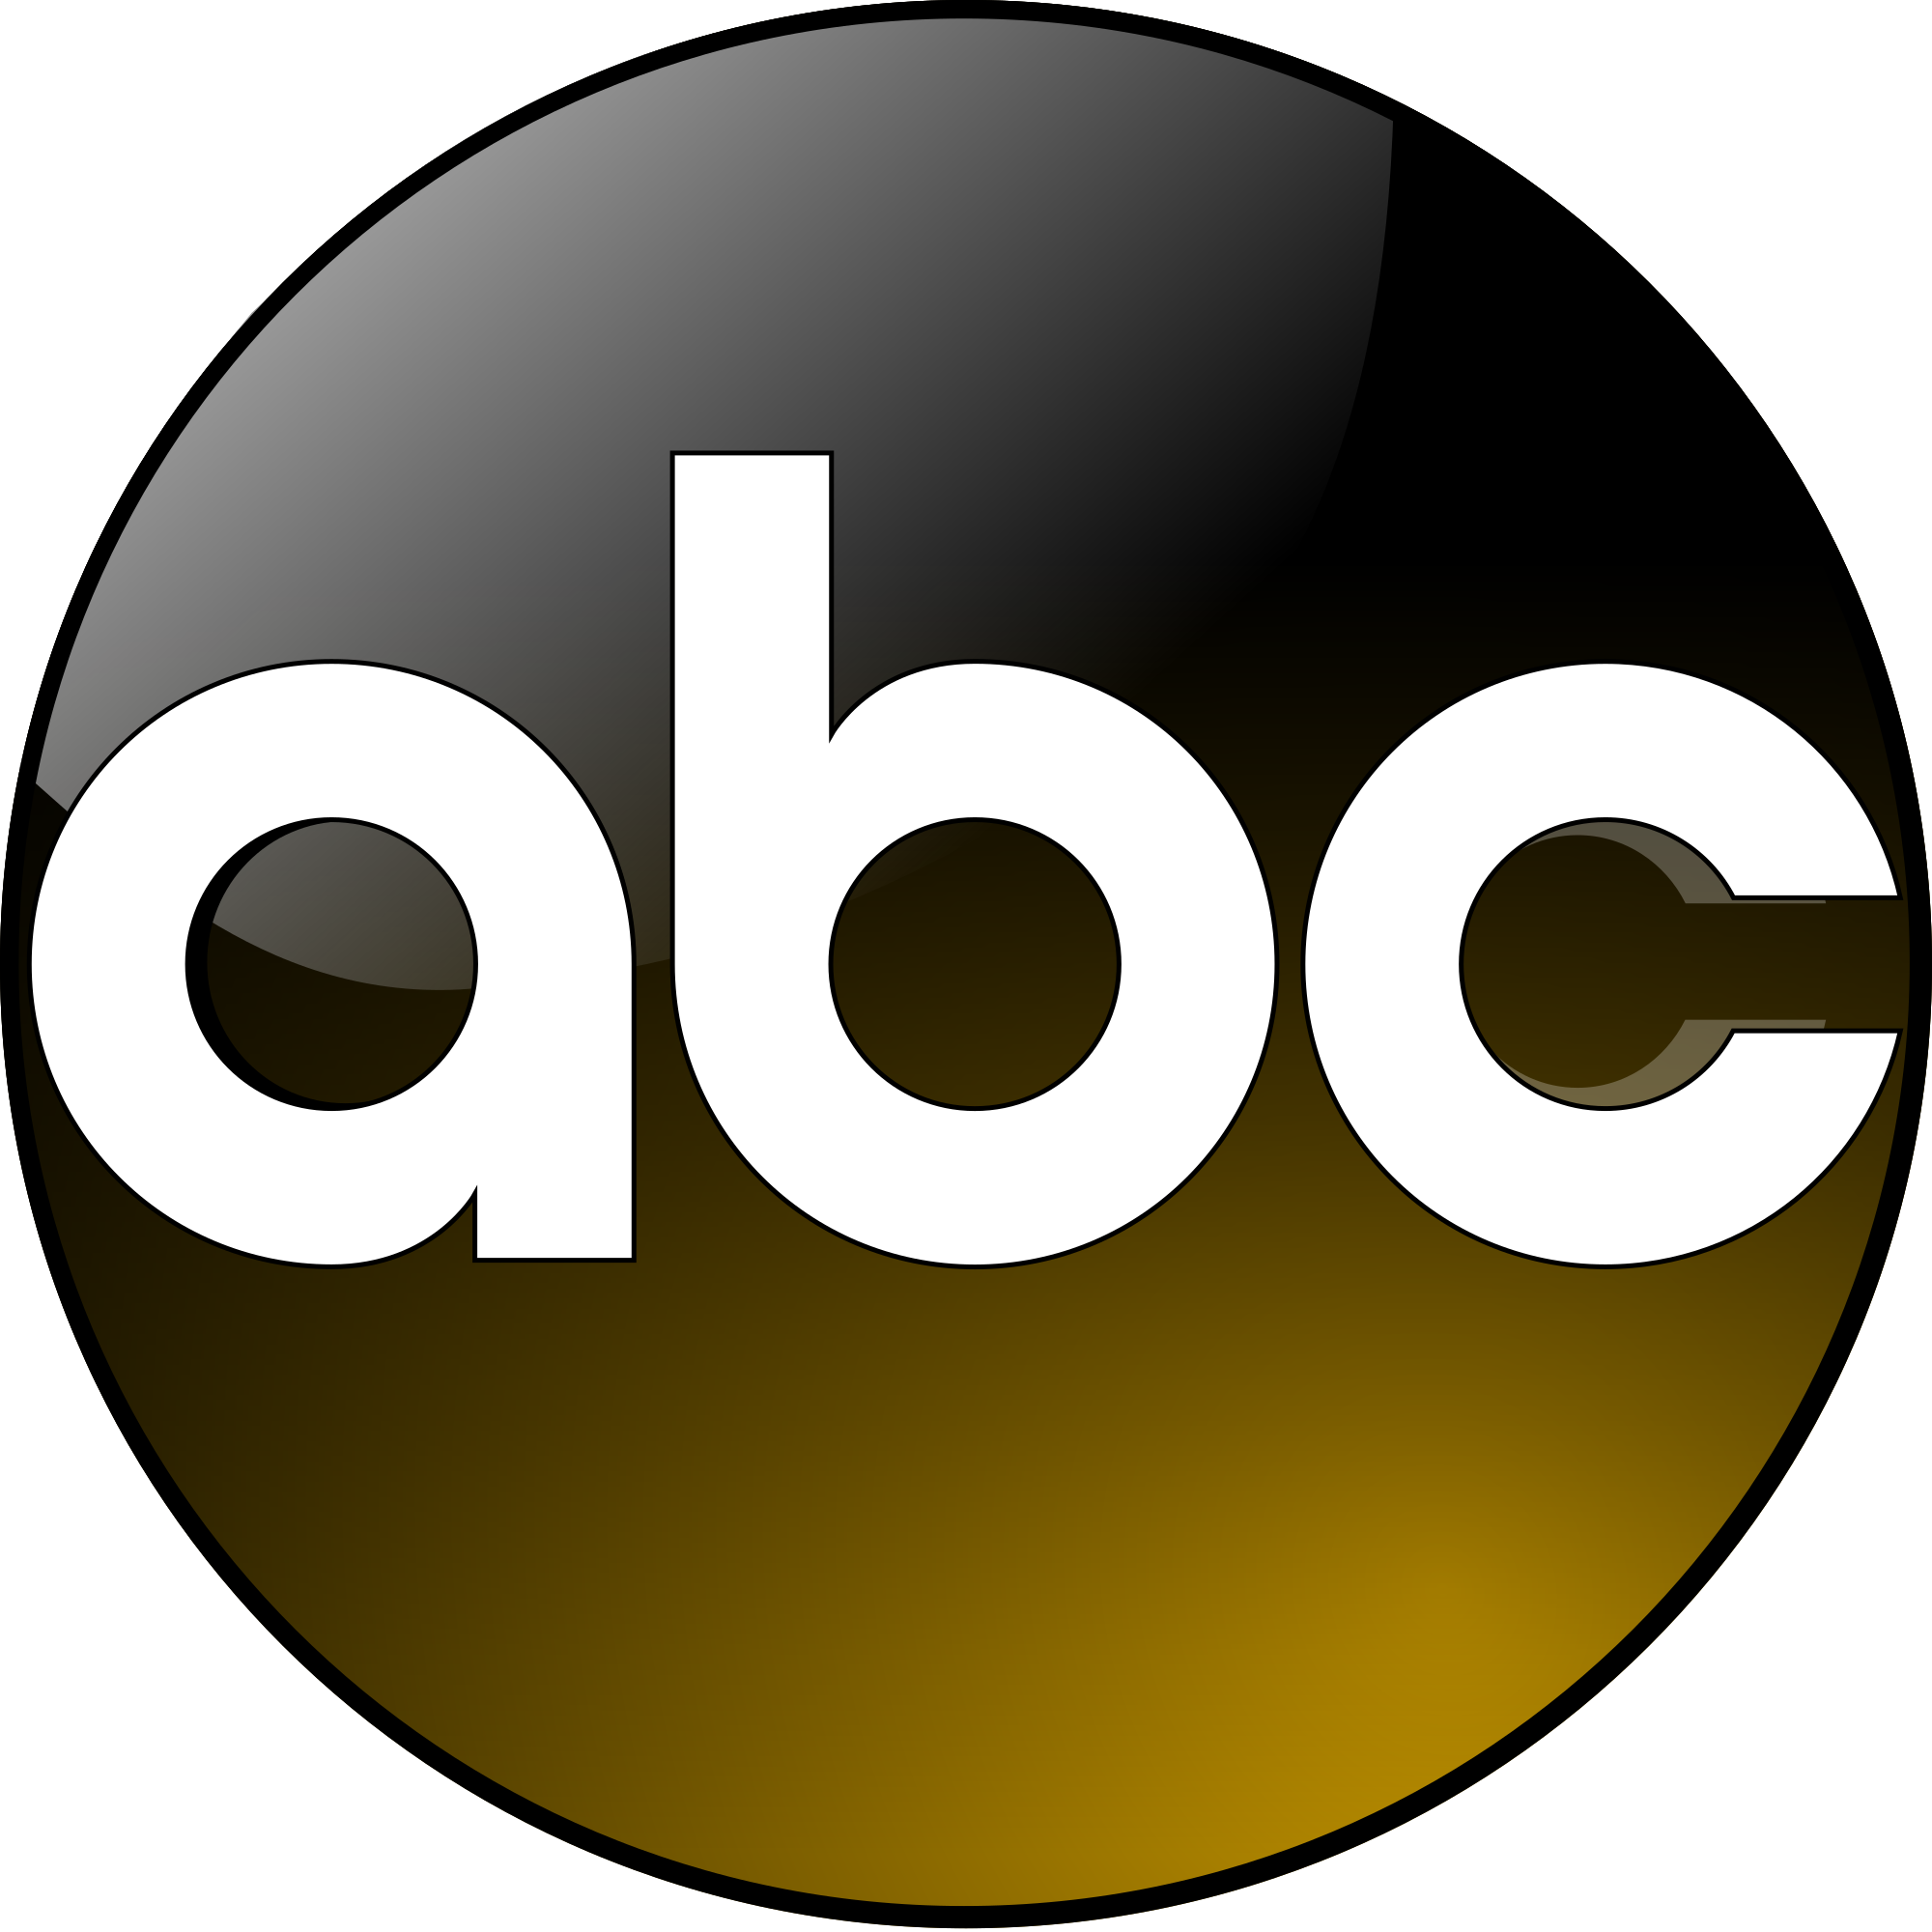 If - American Broadcasting Company (2000x2000)